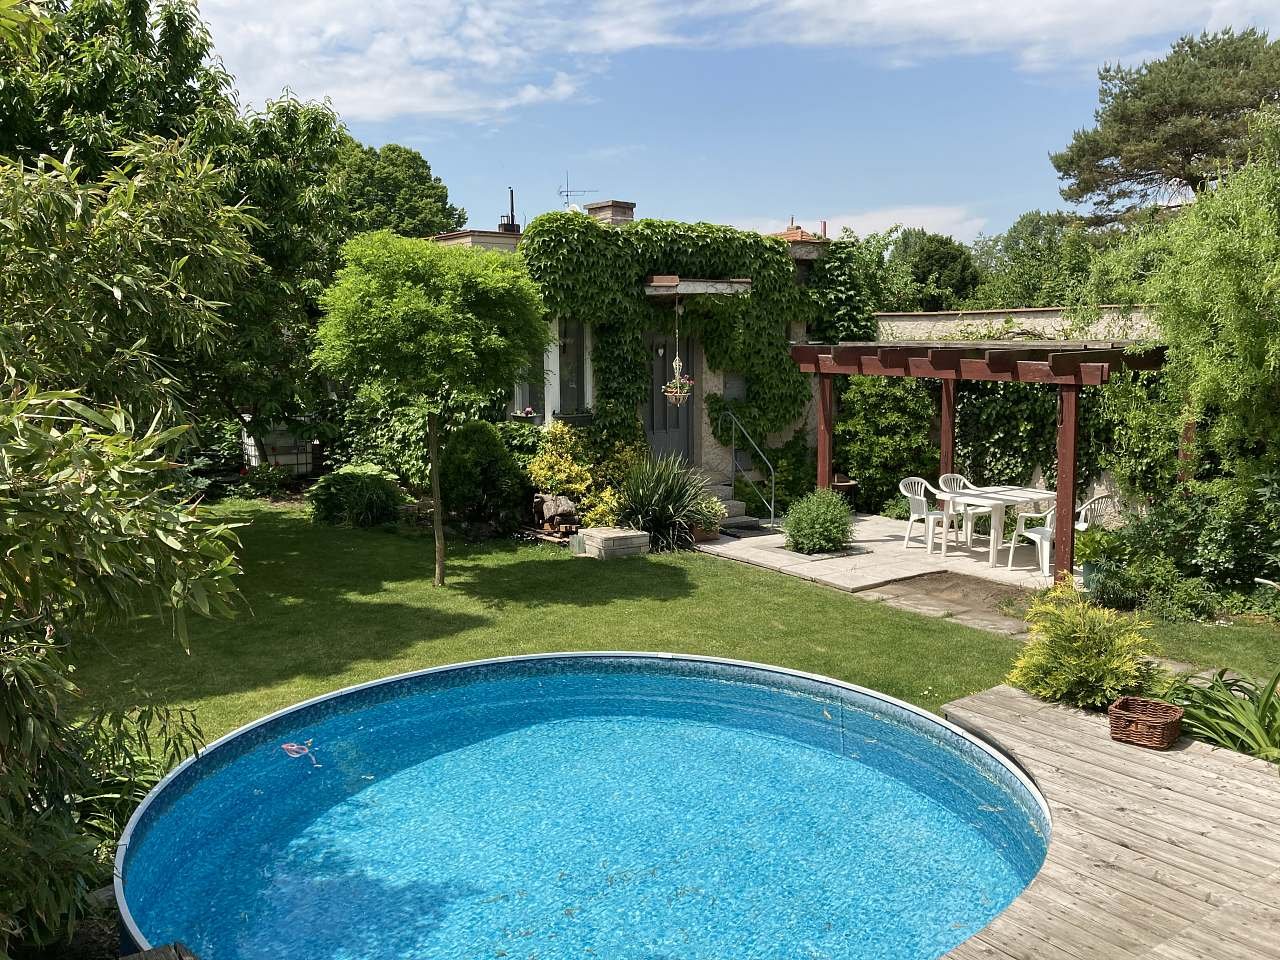 Malý bazénem na zahradě s apartmánem a otevřenou pergolou